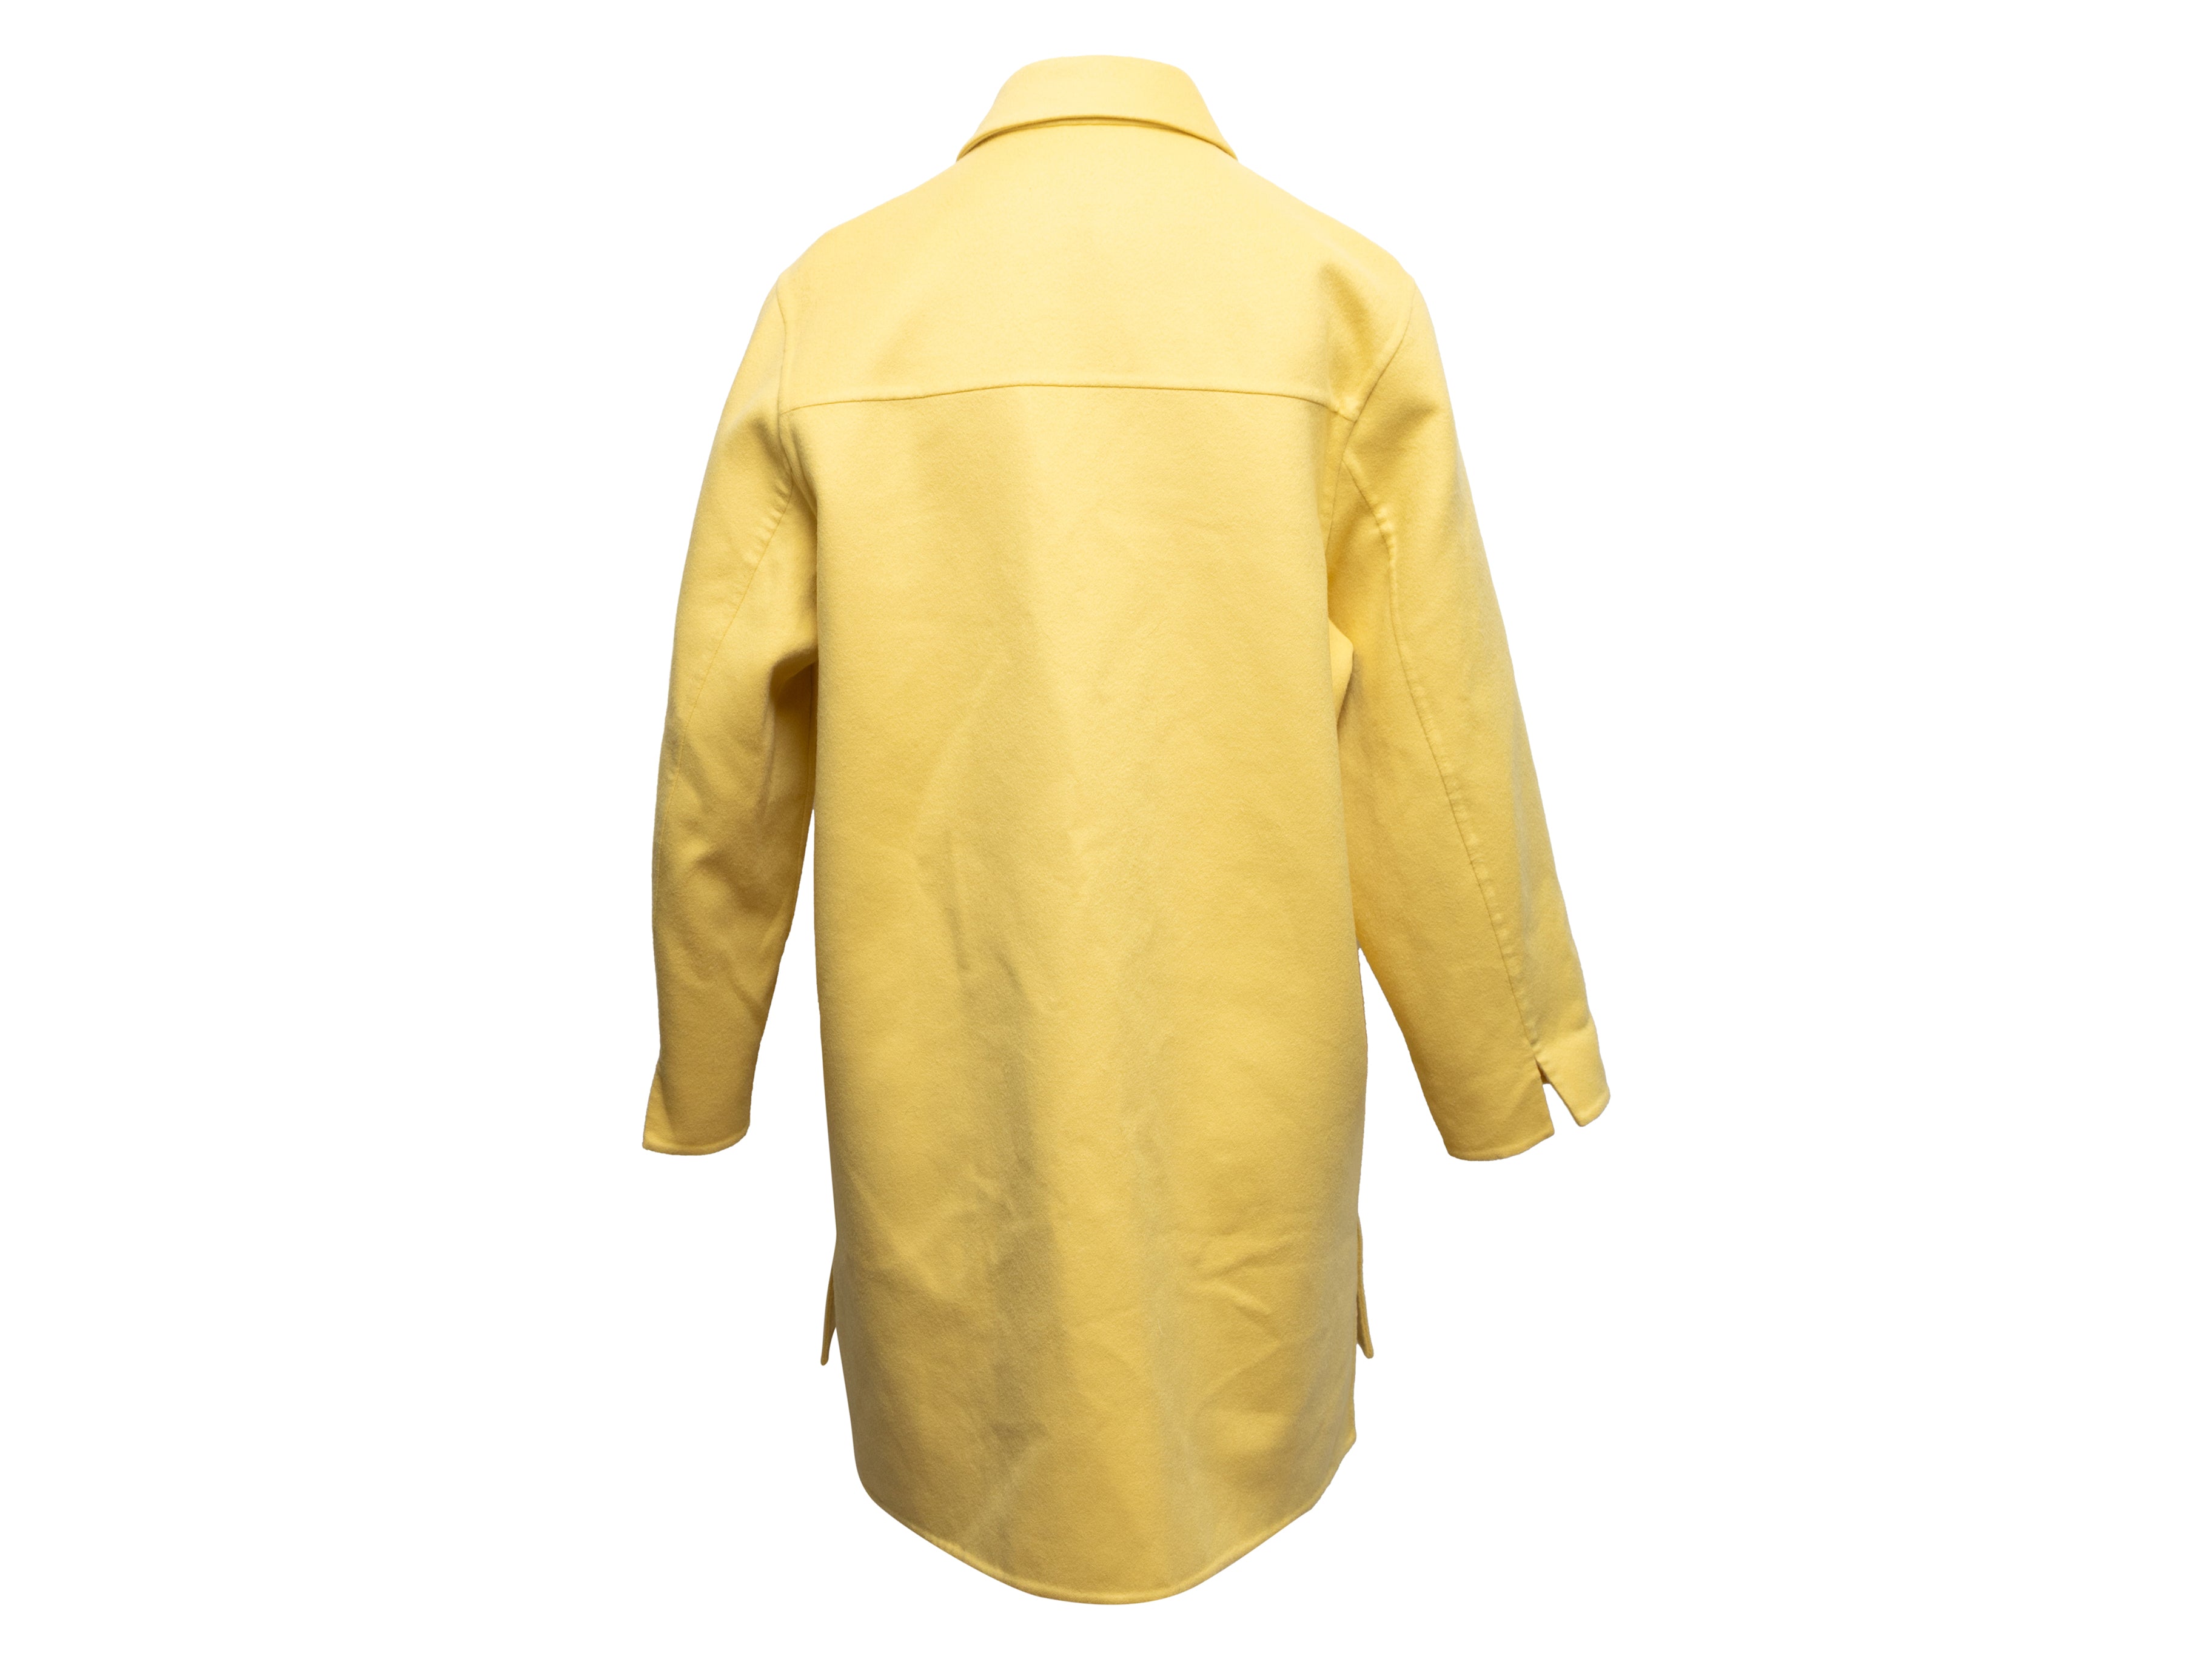 Yellow Mimoa Virgin Wool Zip Coat Size US 4